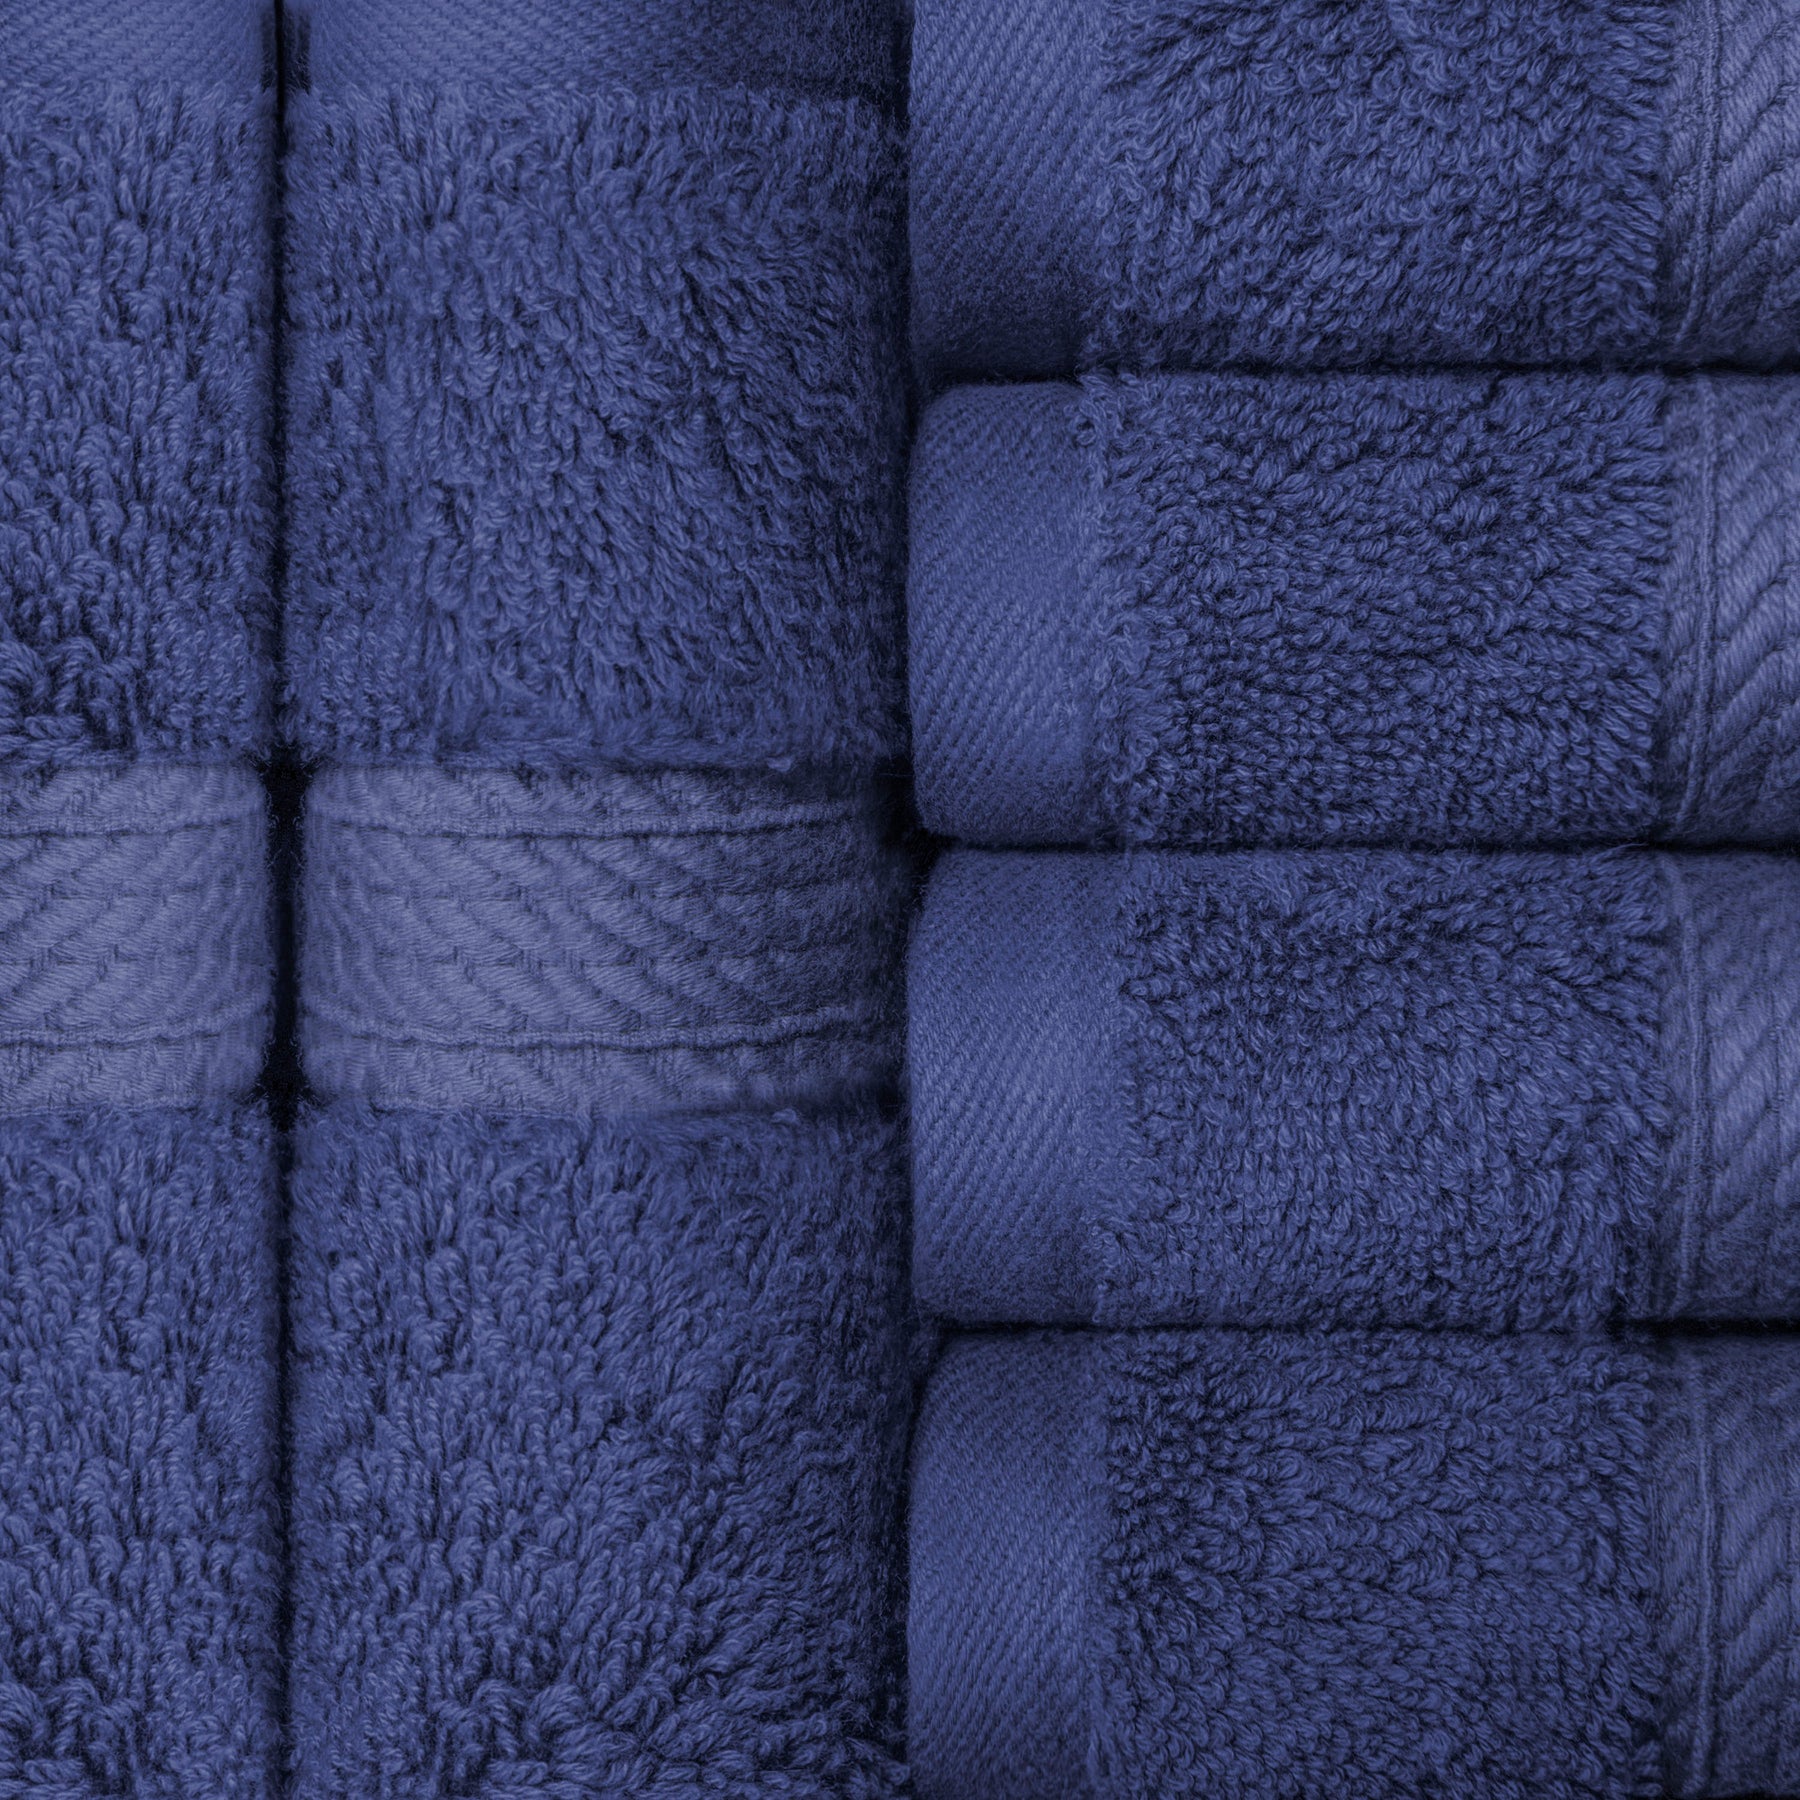 Egyptian Cotton Heavyweight 6 Piece Face Towel/ Washcloth Set - Navy Blue